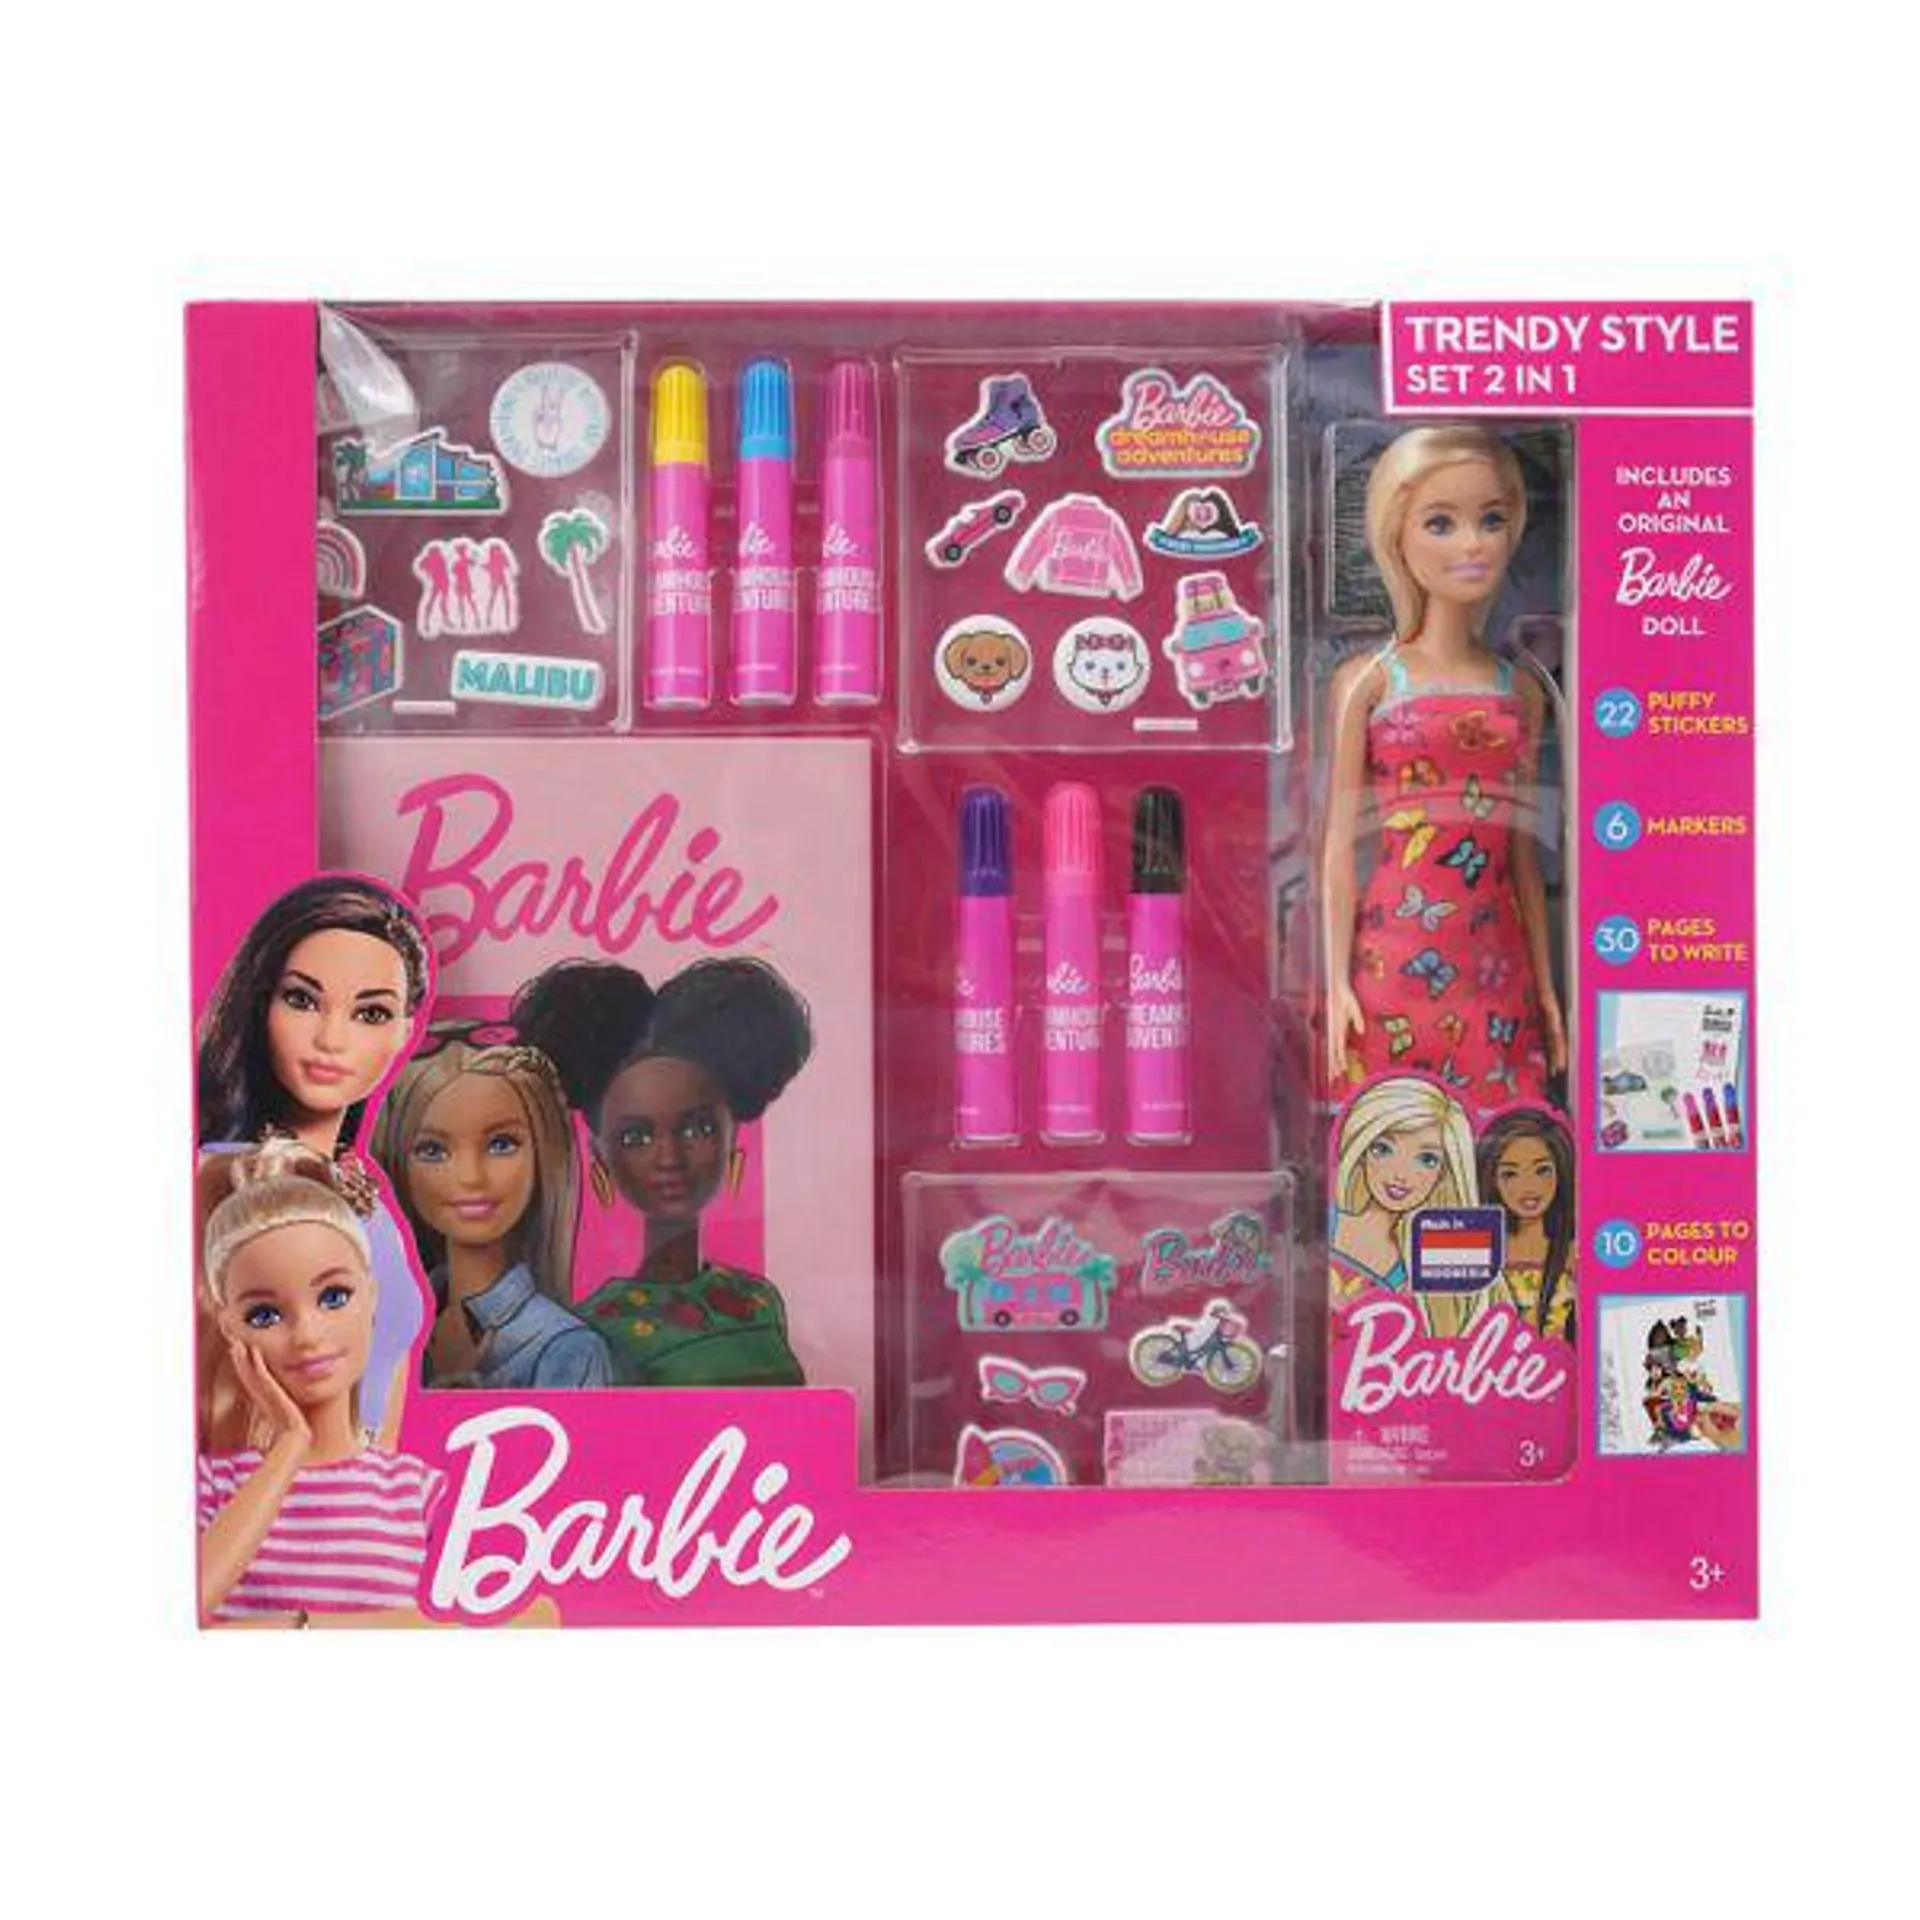 Barbie trendy style 2 in 1